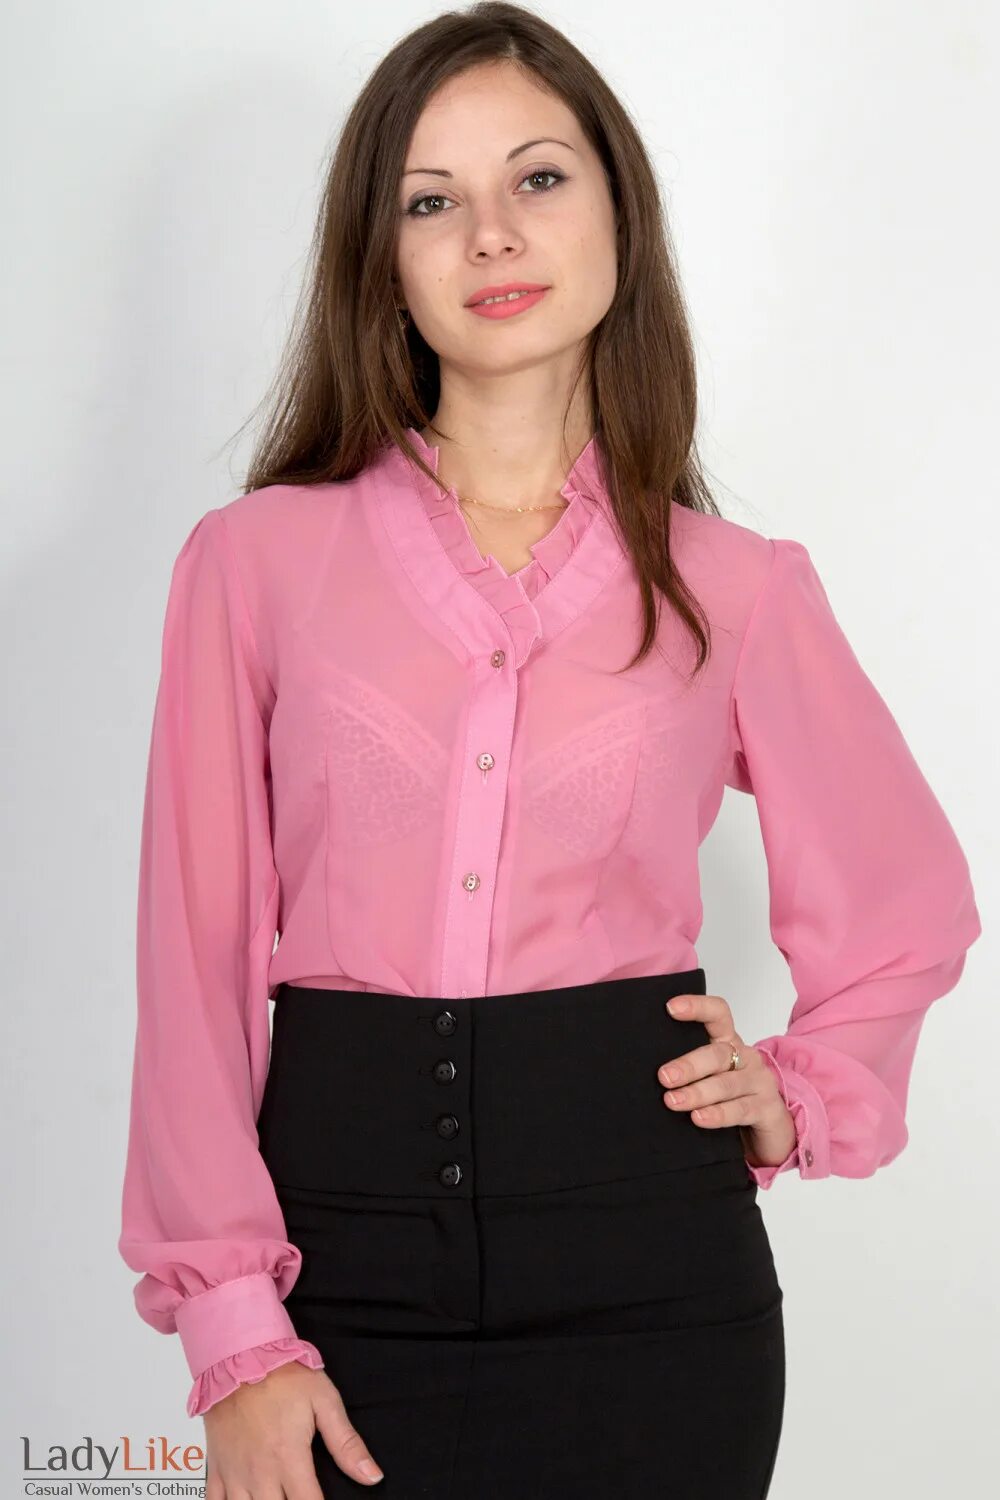 Женские блузки розовые. Блузка женская. Розовая блузка. Розовая блузка женская. Блузка с рюшами.